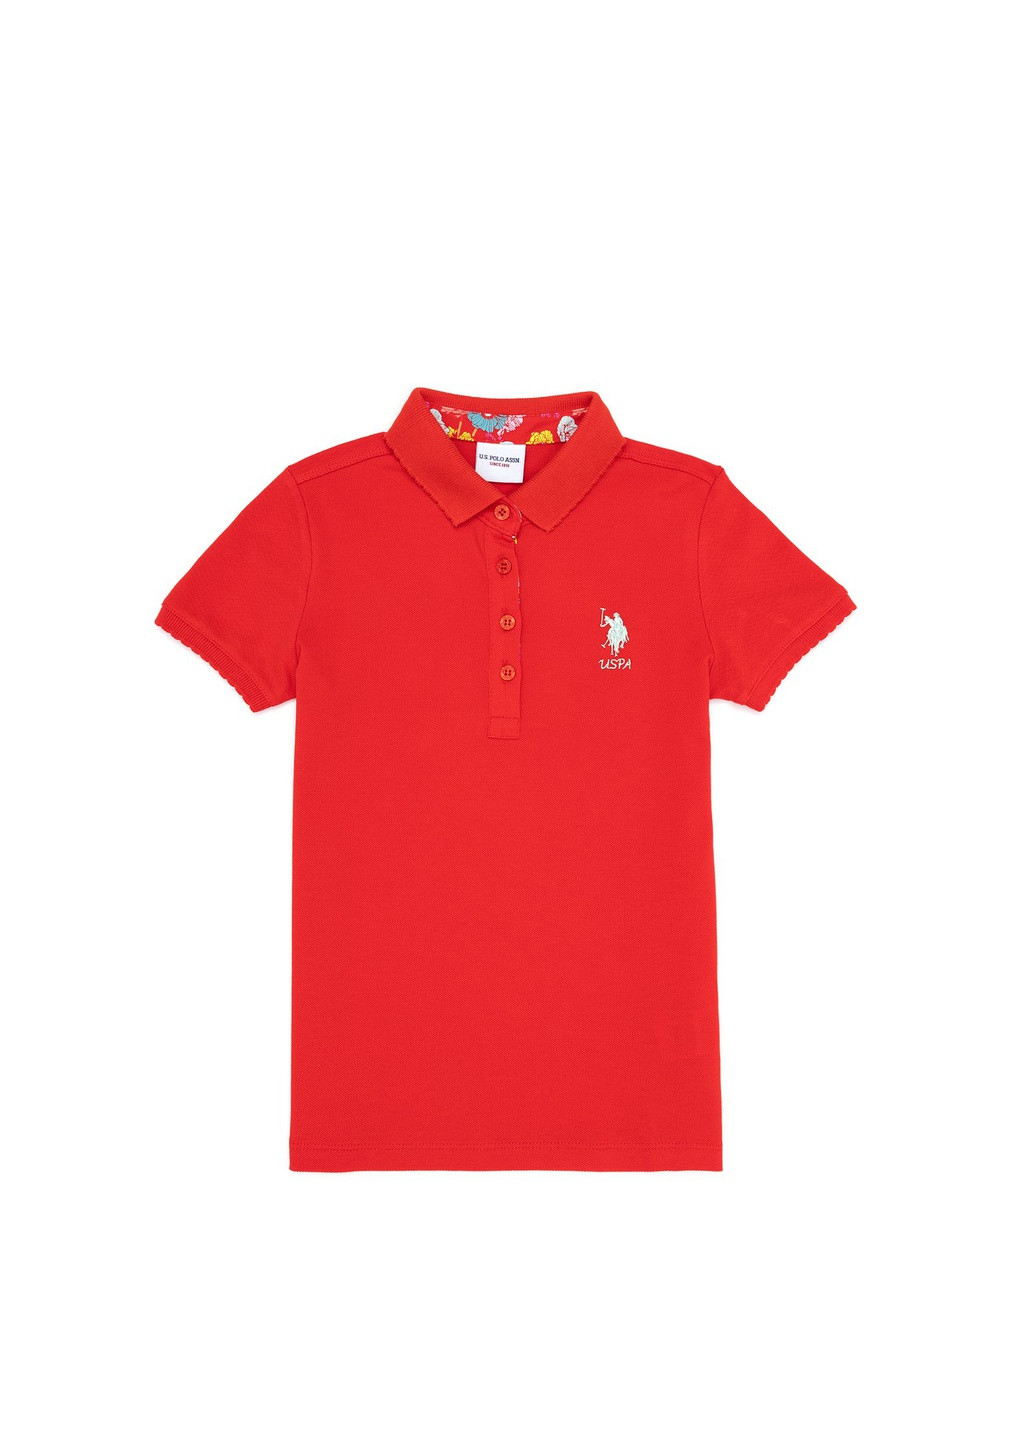 Красная детская футболка-футболка поло u.s.polo assn на девочку для девочки U.S. Polo Assn.